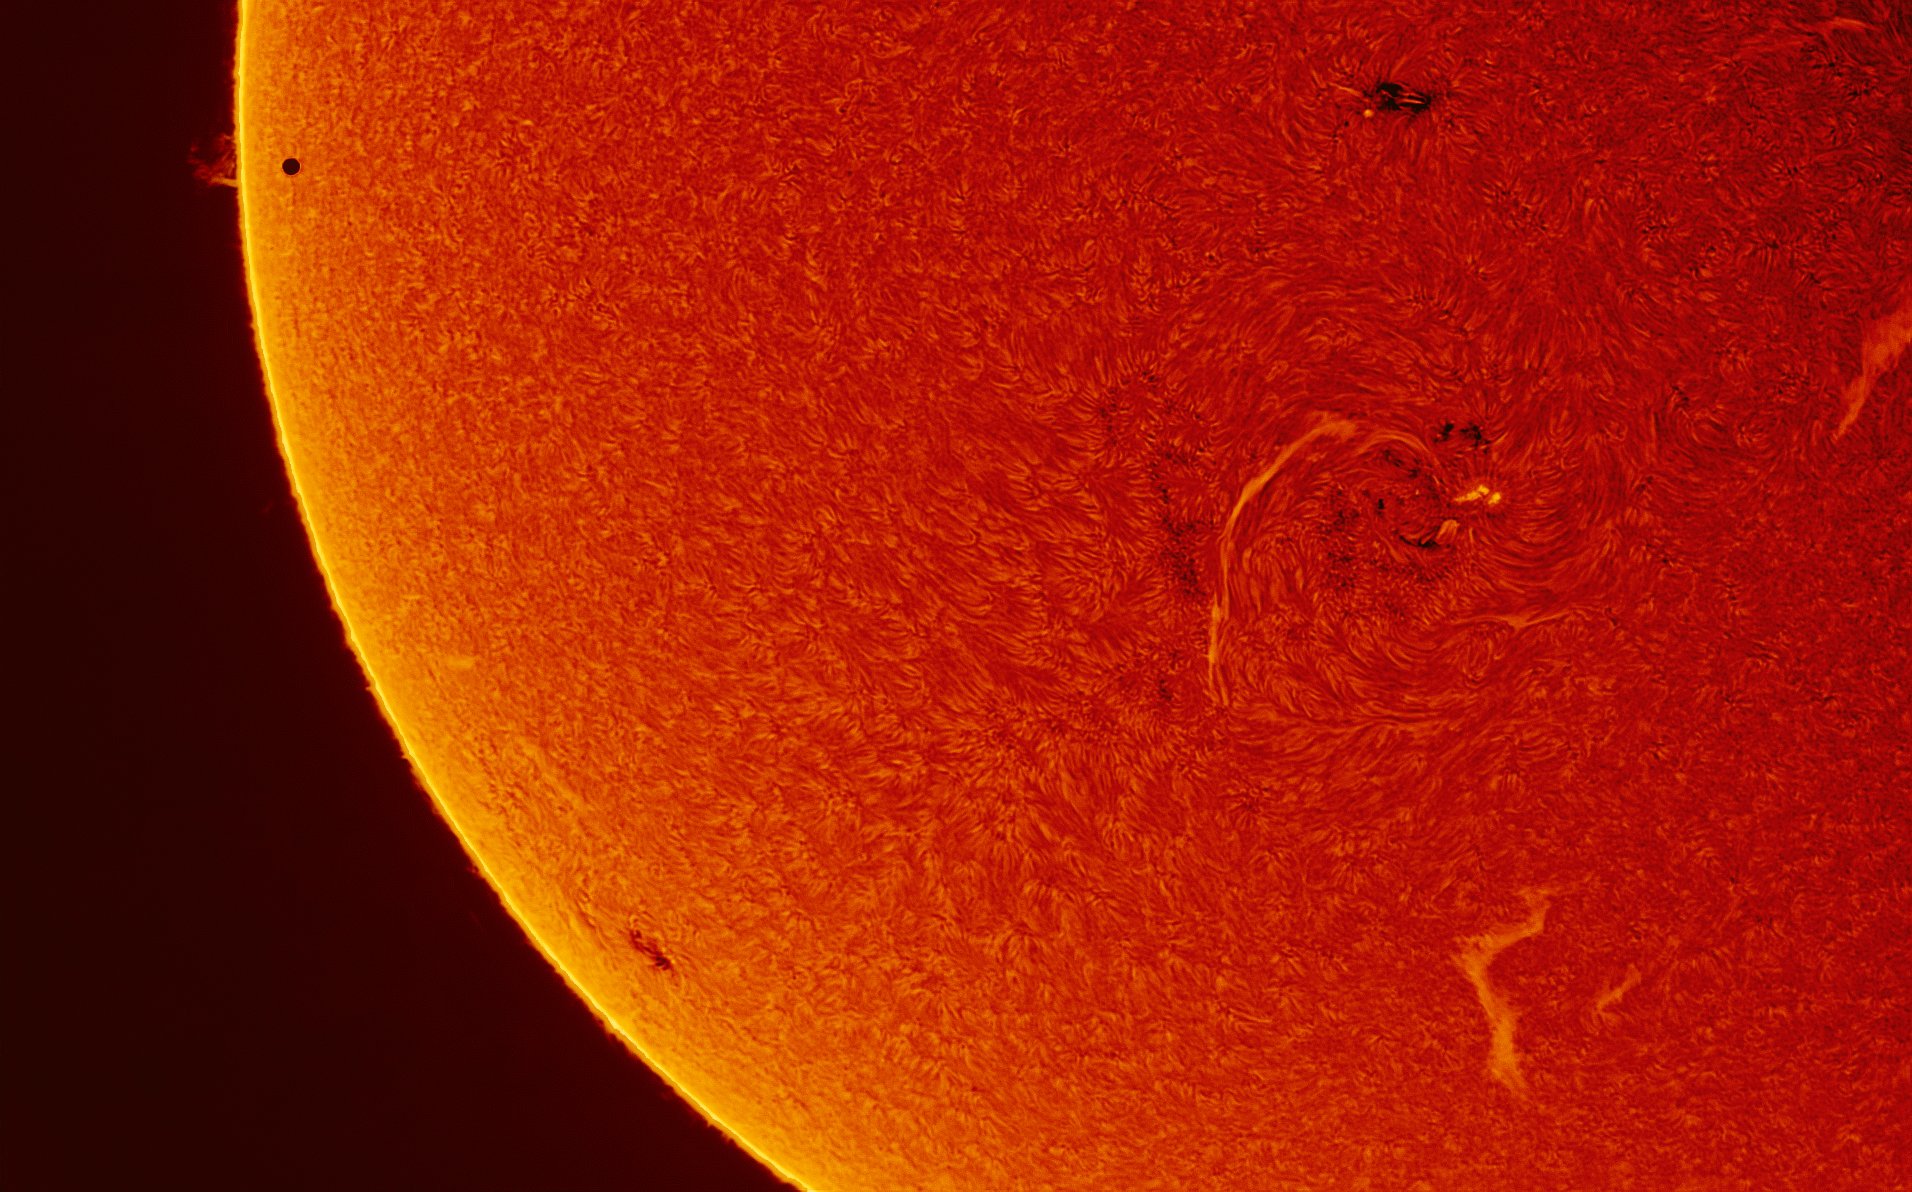 Black dot upper left is Mercury passing infront of the Sun